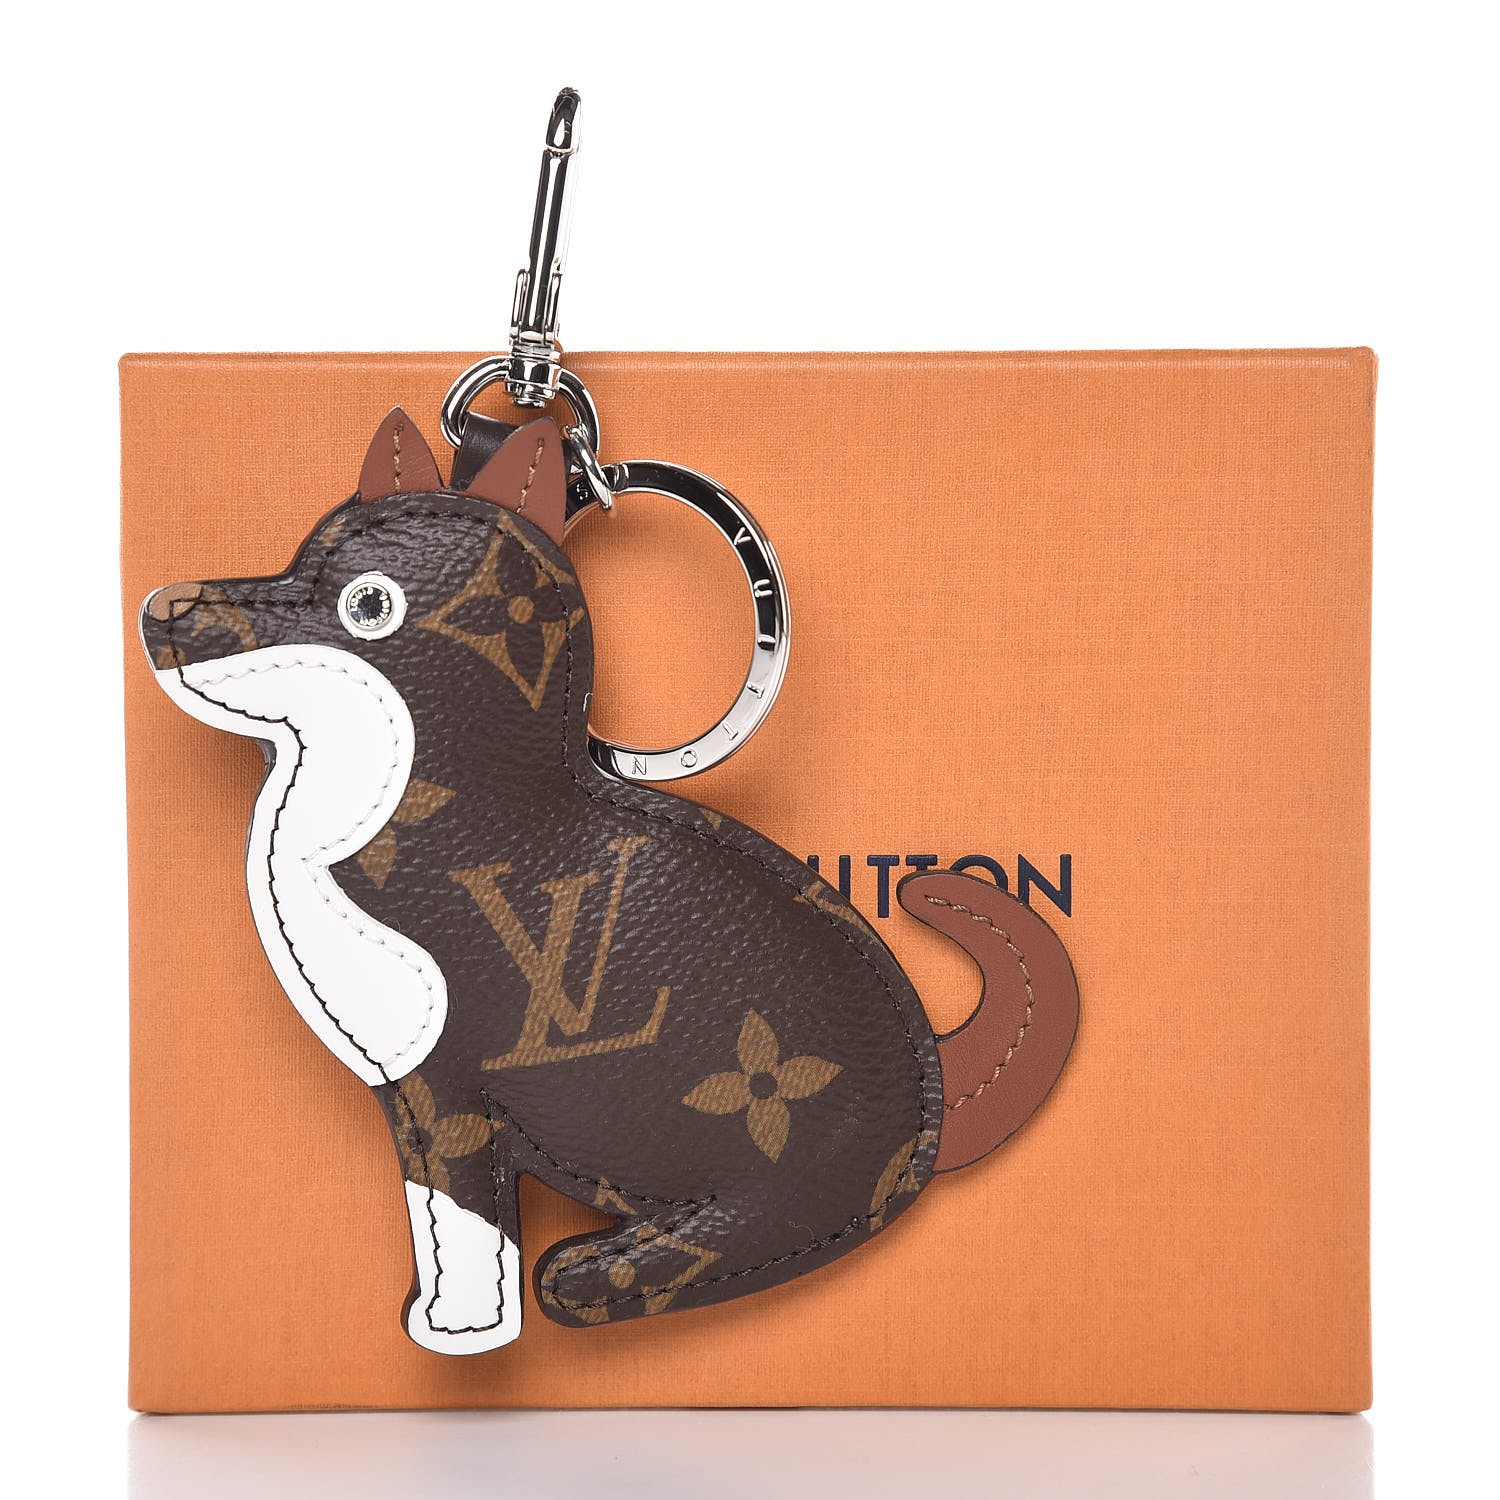 LOUIS VUITTON Monogram Dog Bag Charm Key Holder 326880